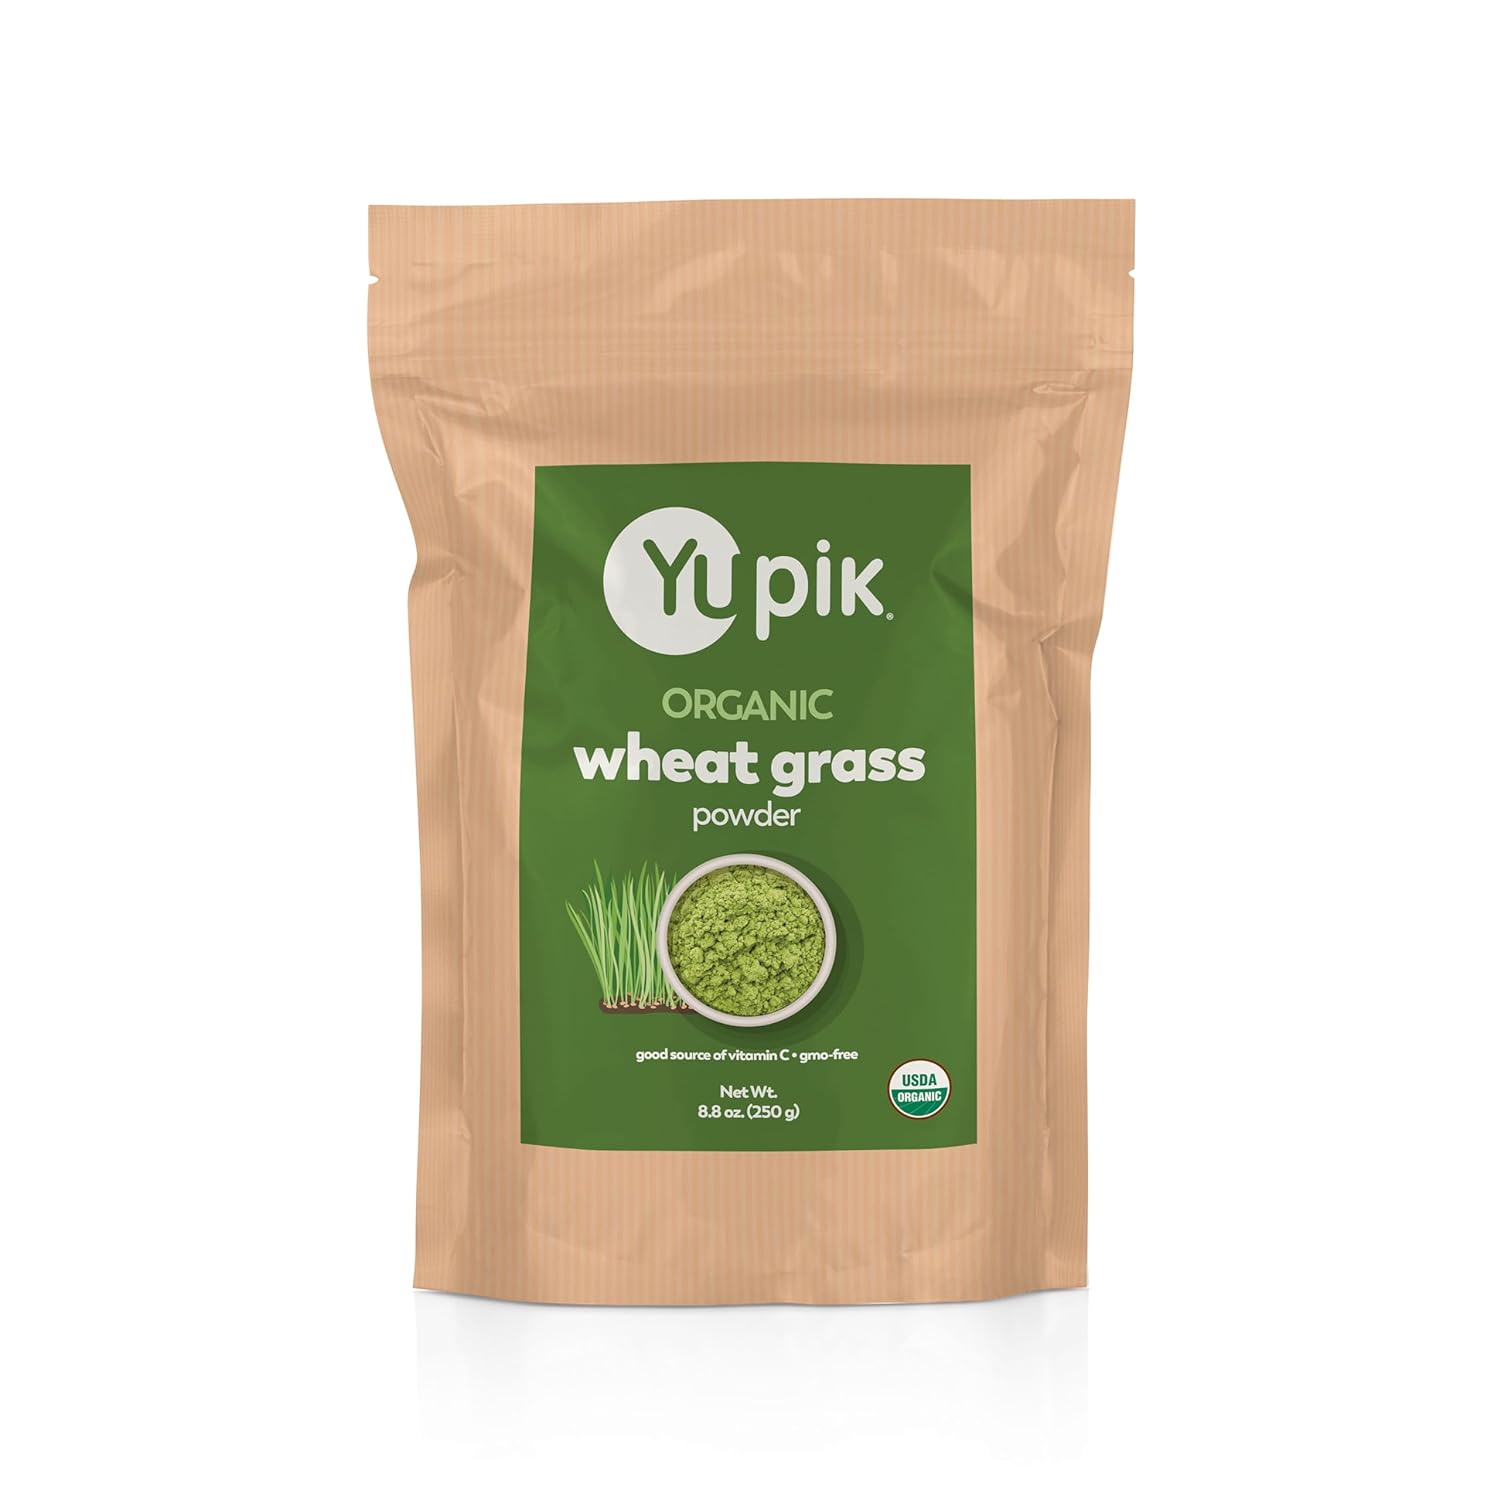 Yupik Organic Wheat Grass Powder, 8.8 oz, Vegan, GMO-Free, Vegetarian, Gluten-Free